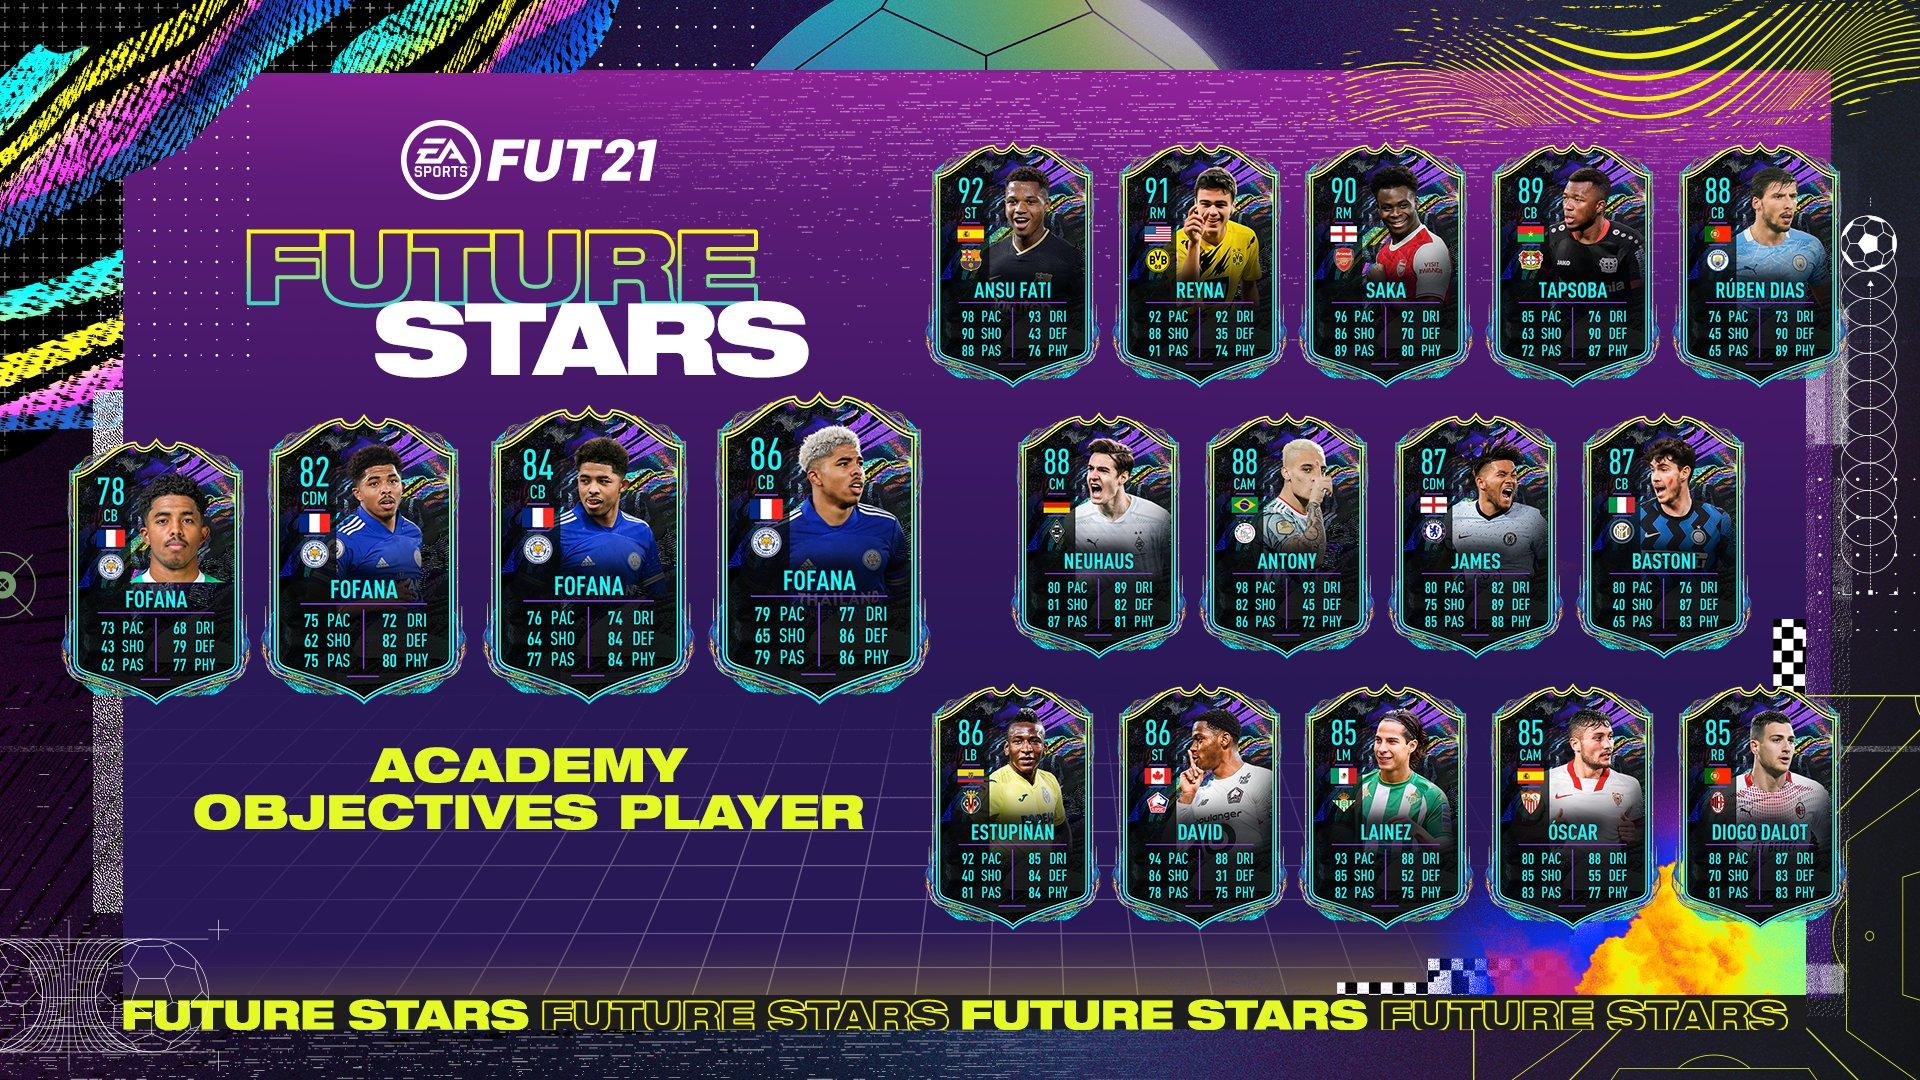 wesley fofana academy objectives player in fifa 21 Future Stars promo